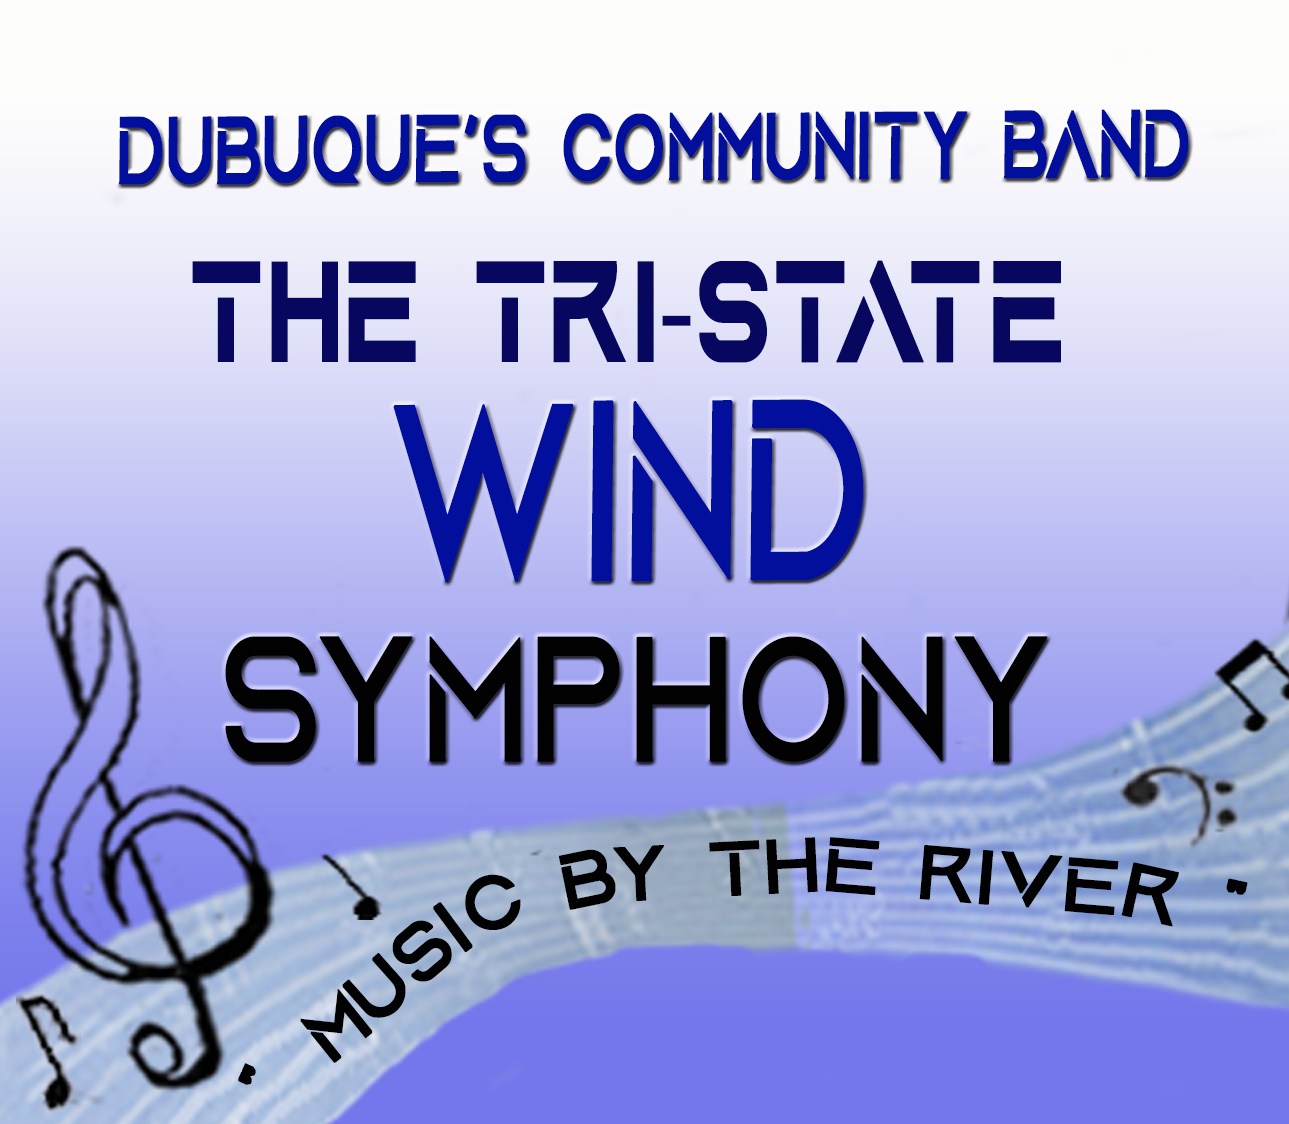 The Tri-State Wind Symphony